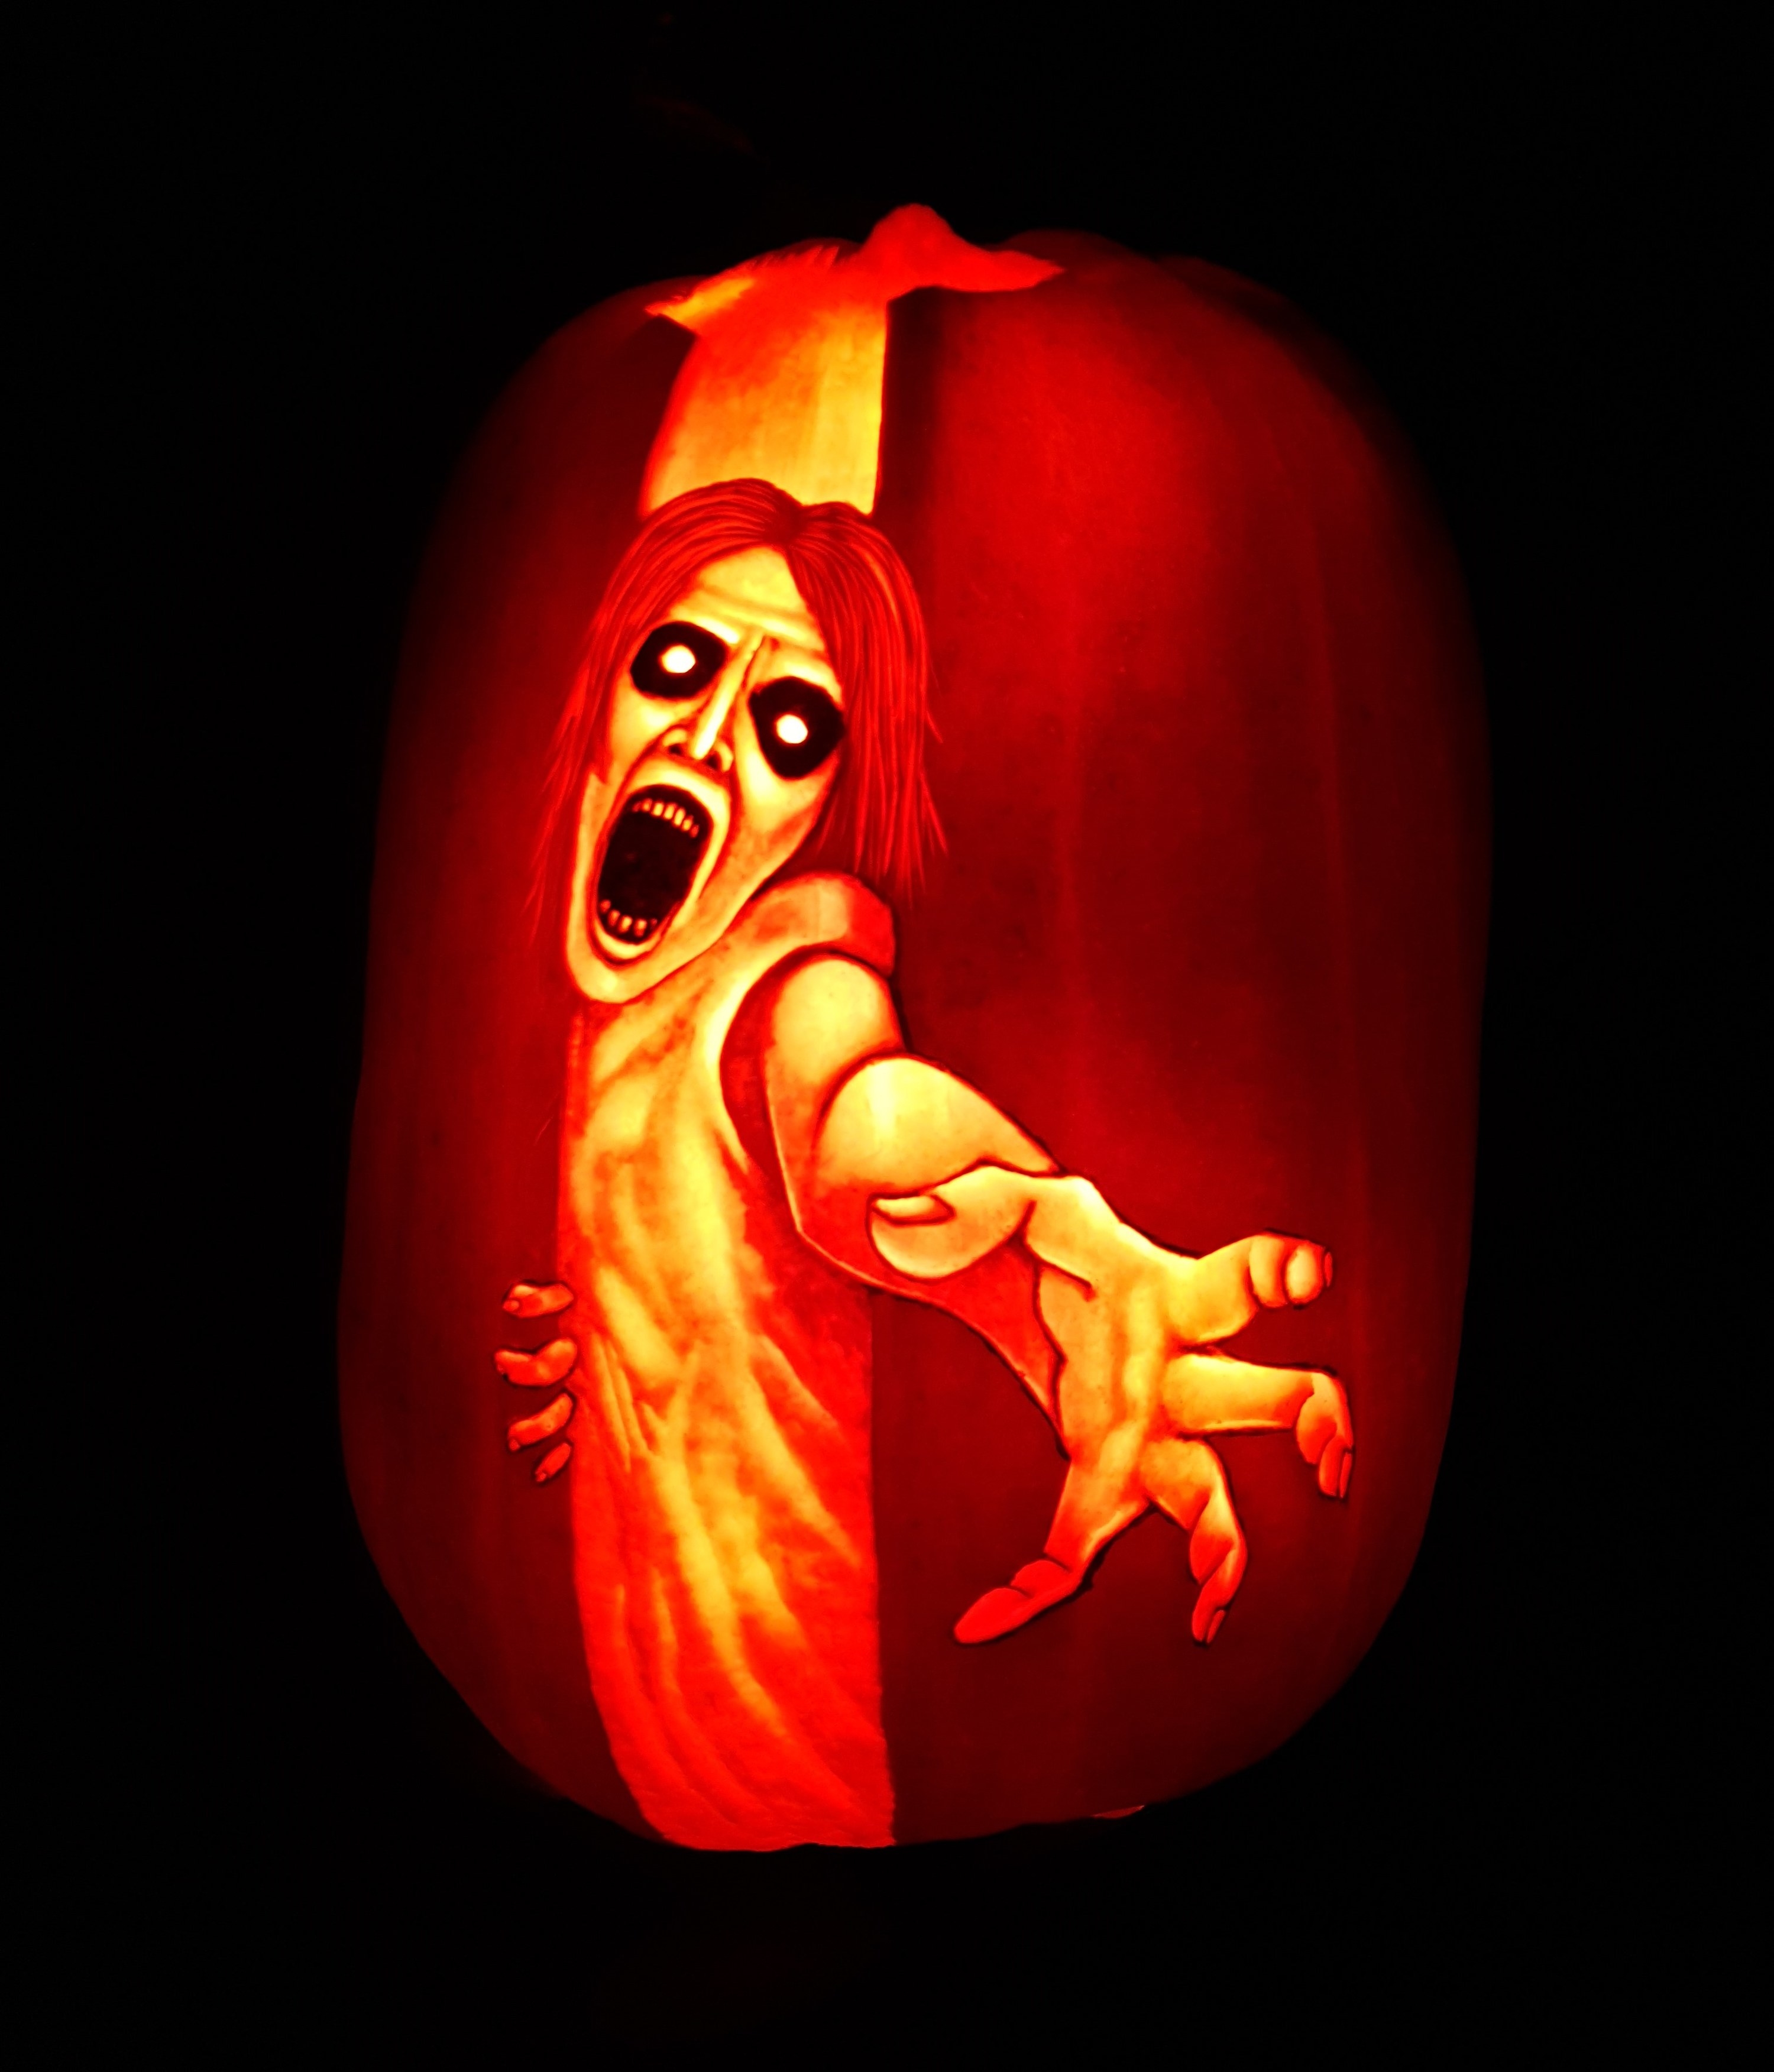 A ghost 3D carved design on a pumpkin